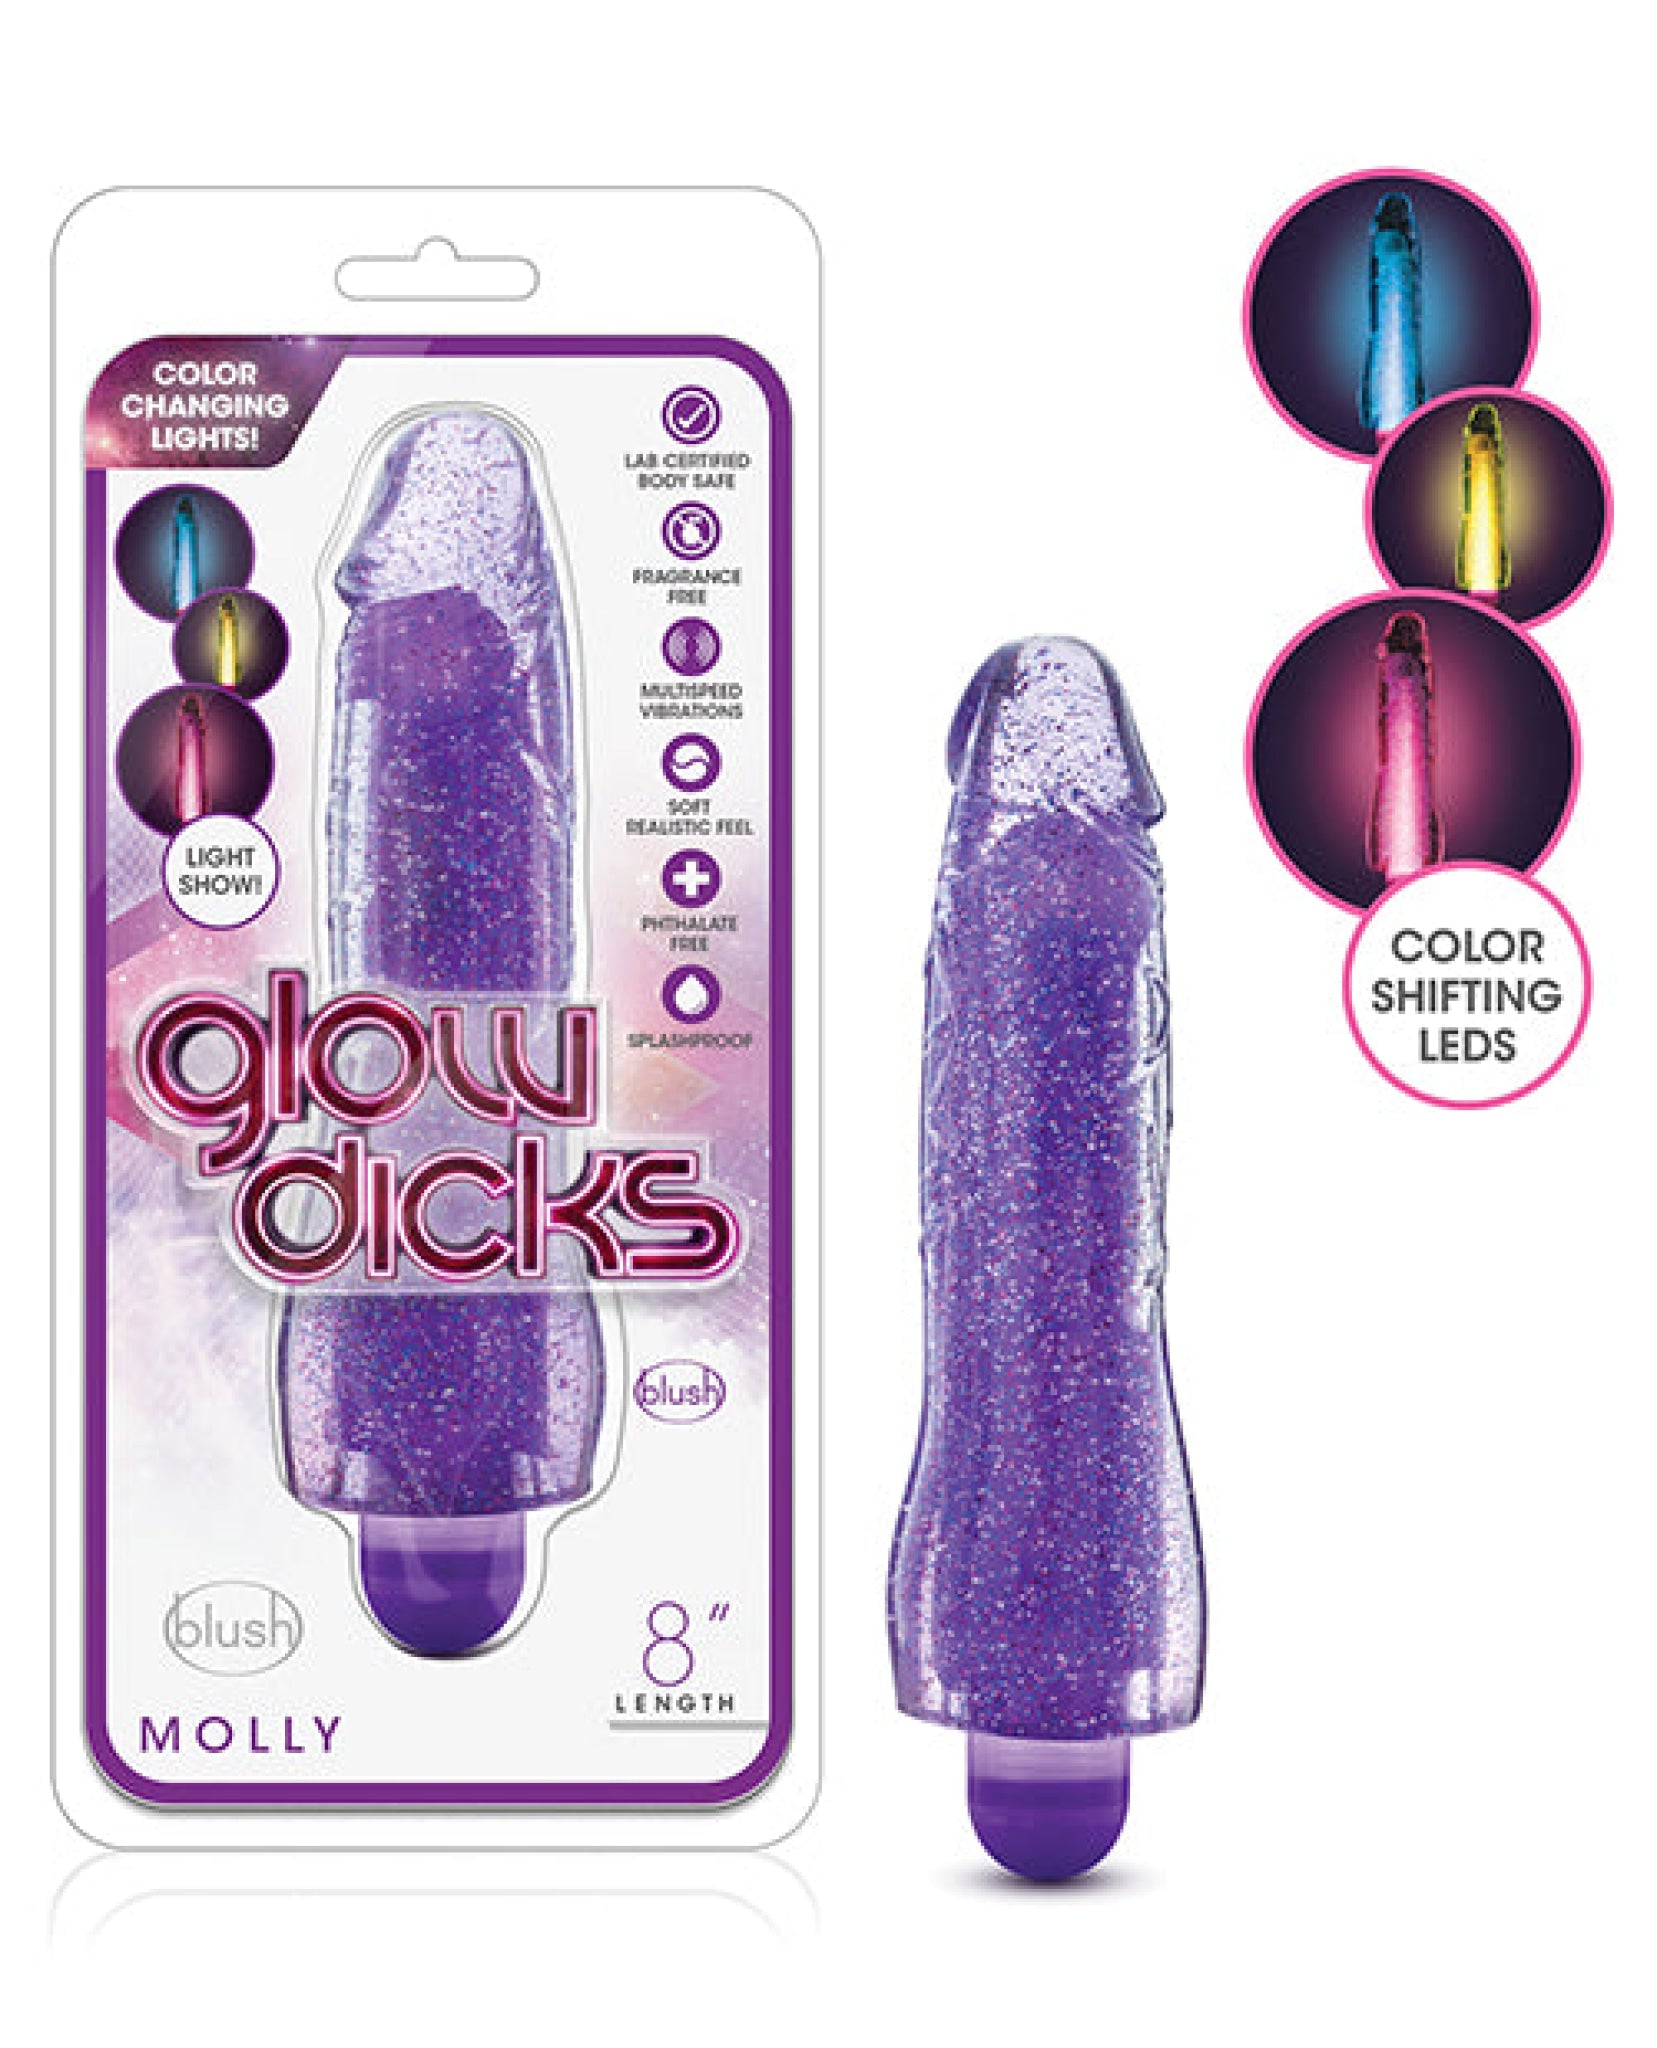 Blush Glow Dicks Glitter Vibrator Molly Blush Novelties